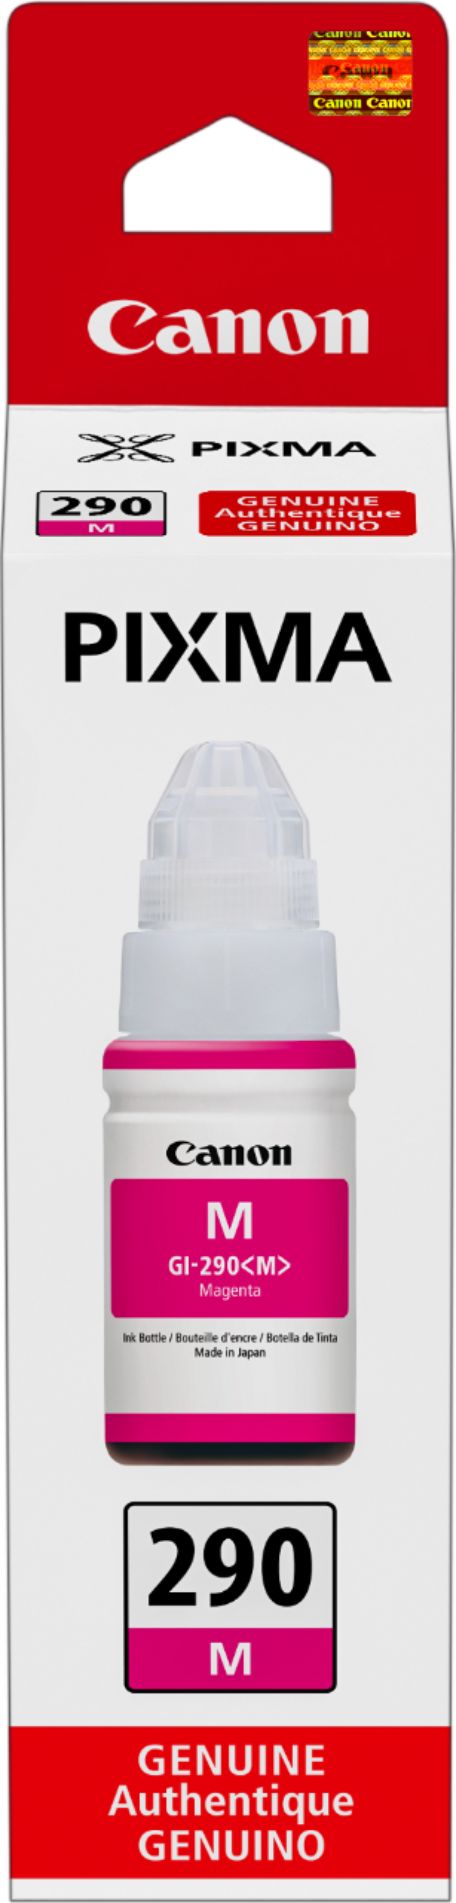 Canon - MegaTank GI-290 Ink Bottle - Magenta